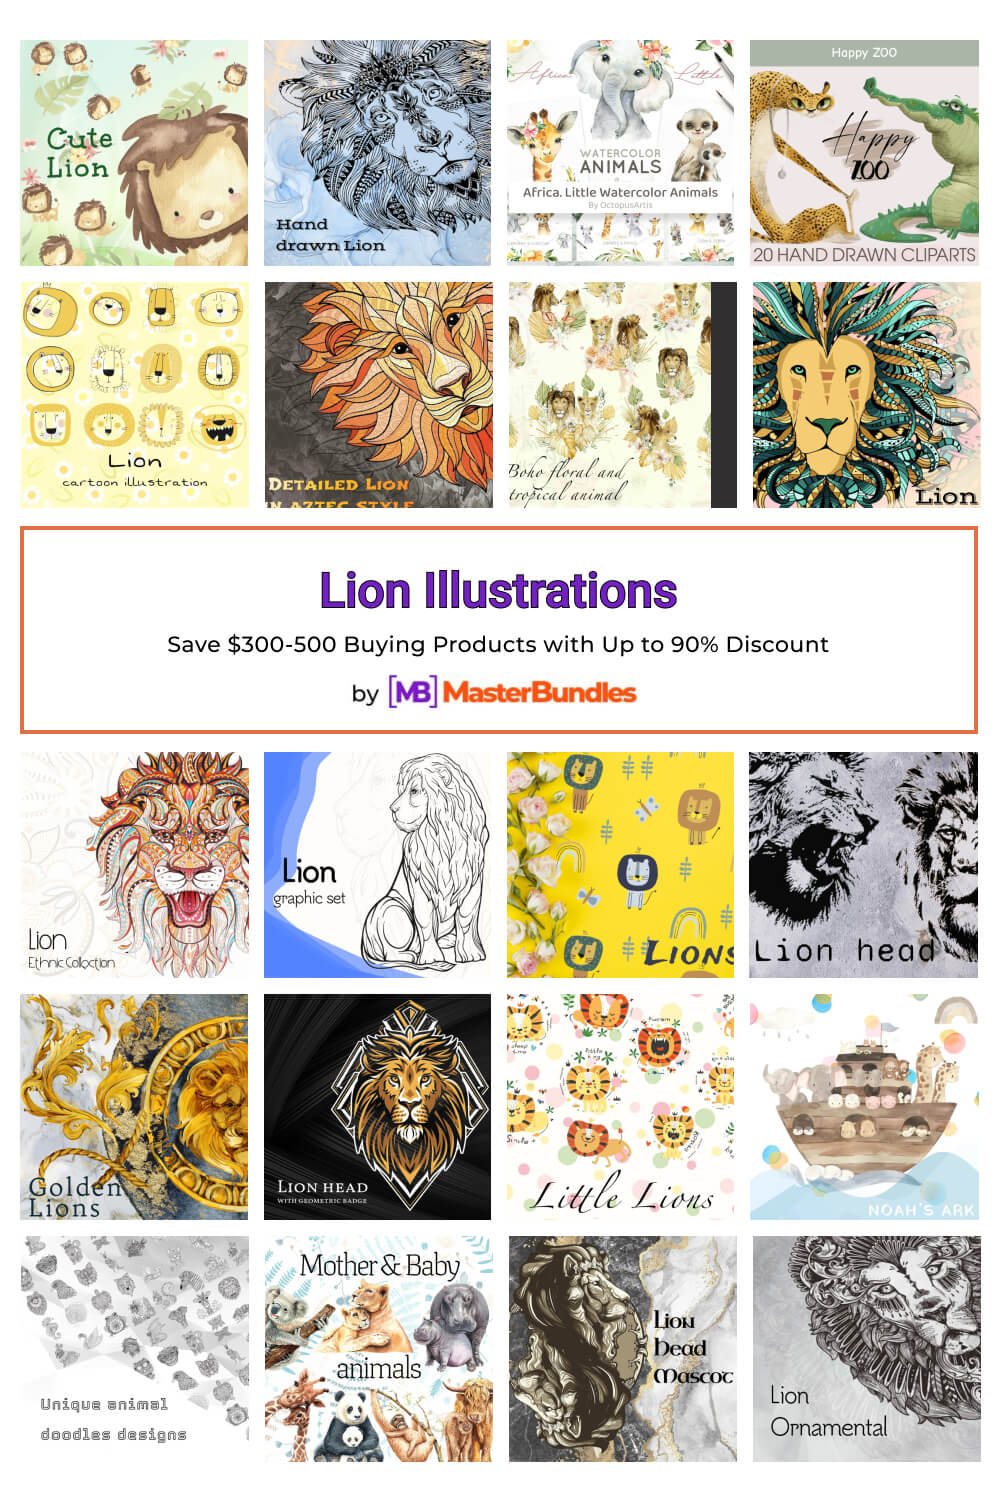 lion illustrations pinterest image.